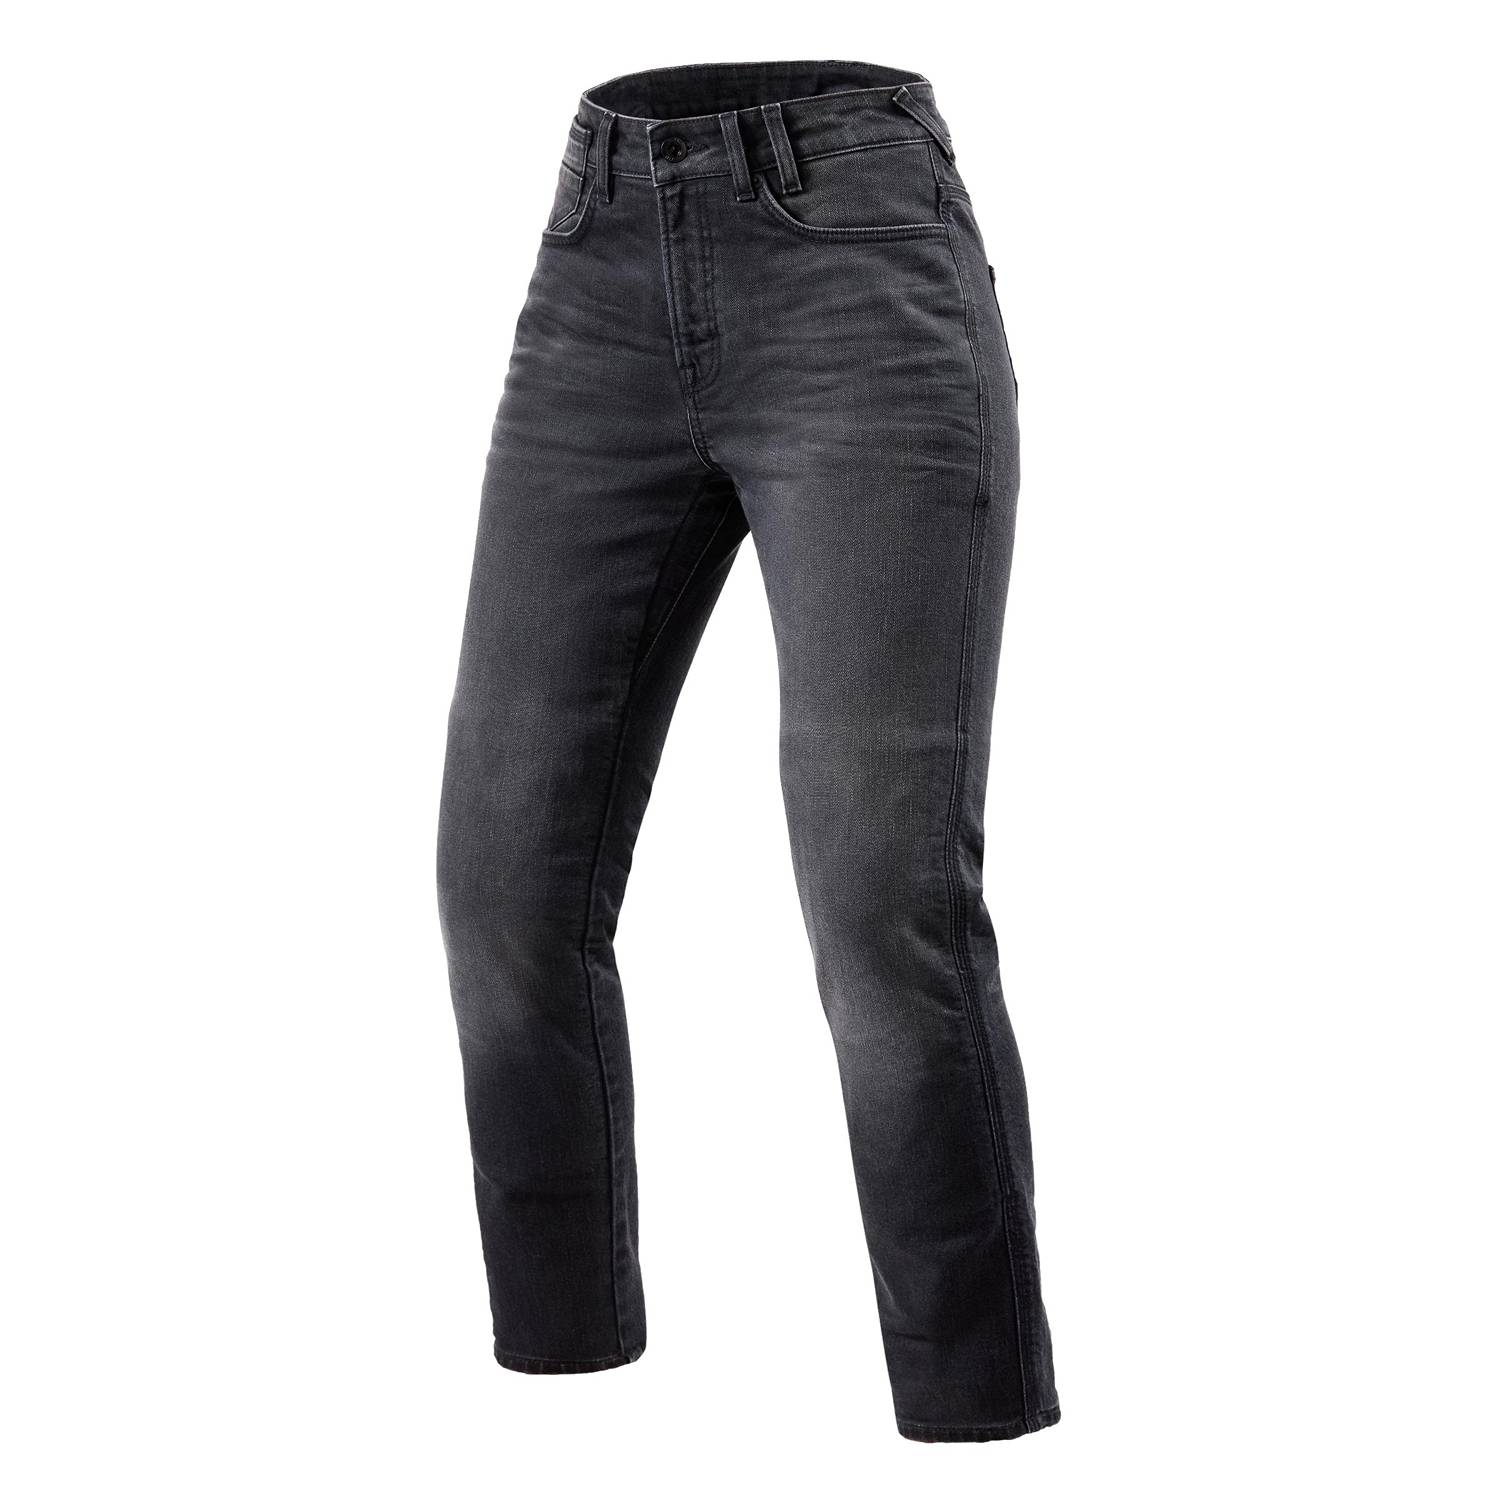 Image of REV'IT! Jeans Victoria 2 Ladies SF Mid Grey Used Motorcycle Jeans Size L30/W32 EN